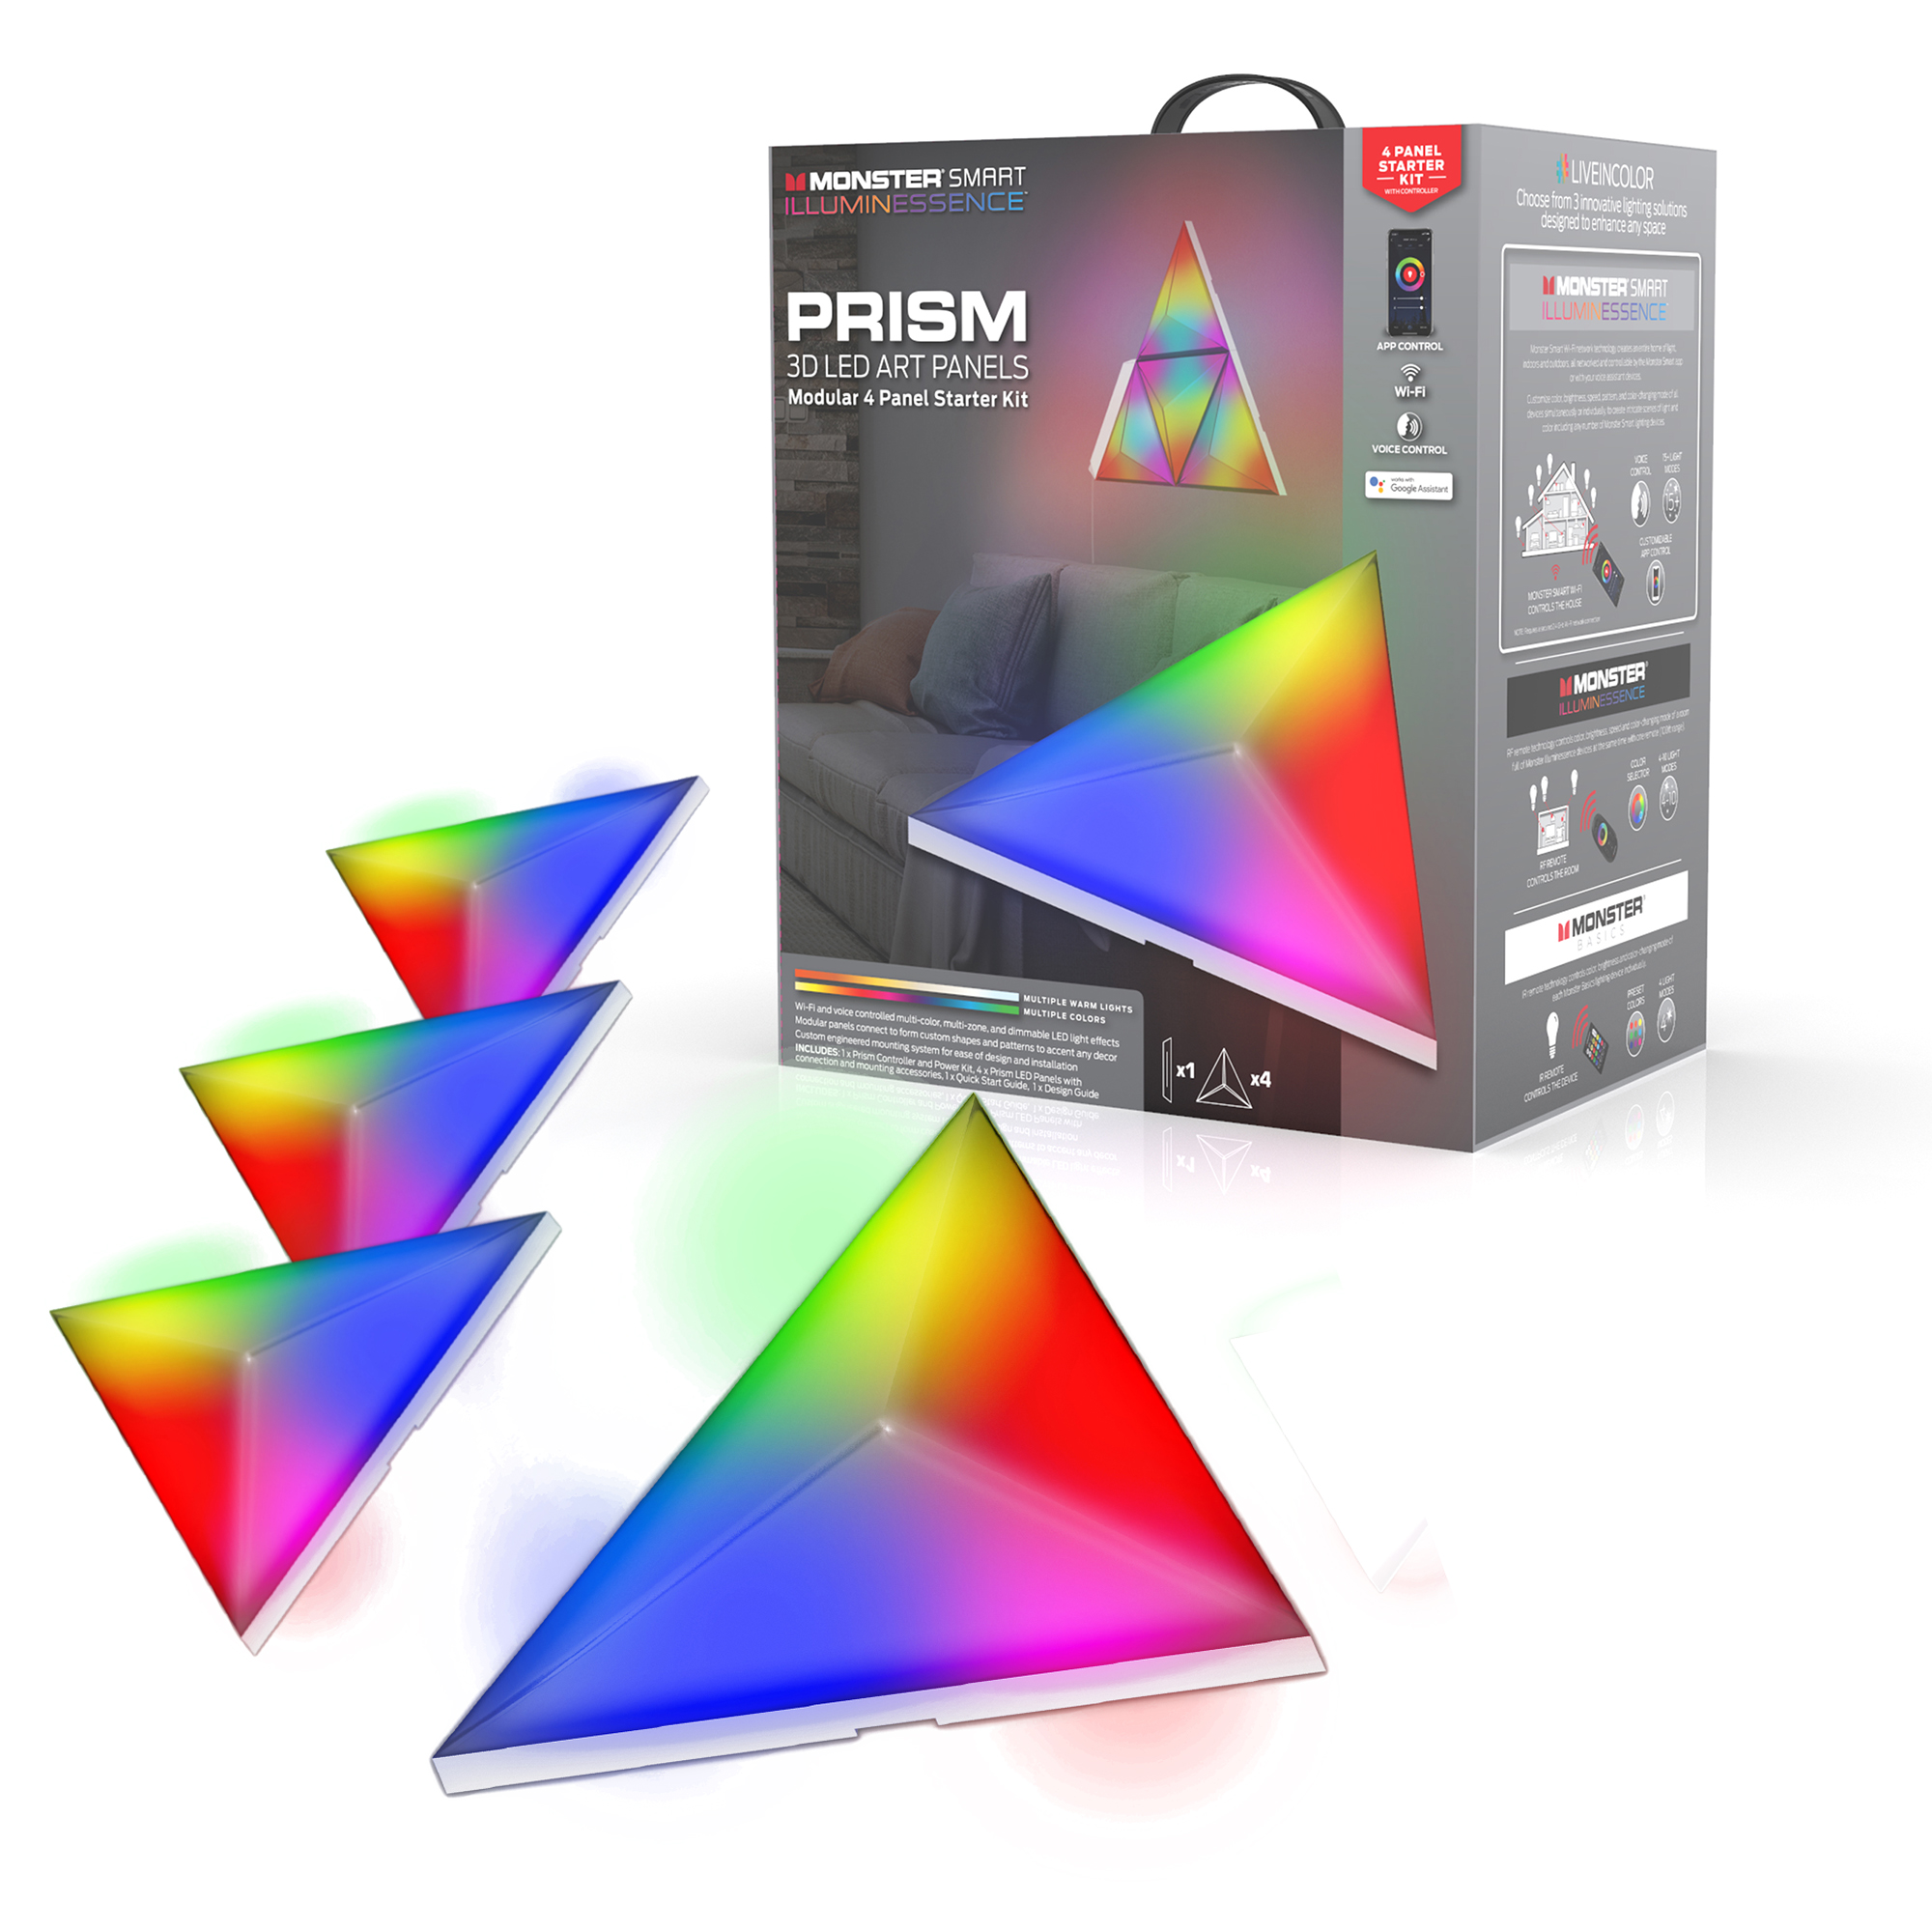 Monster Smart Prism 3D LED Multi-color Art Panels, Modular Panel Starter  Kit with Controller, Novelty Lighting